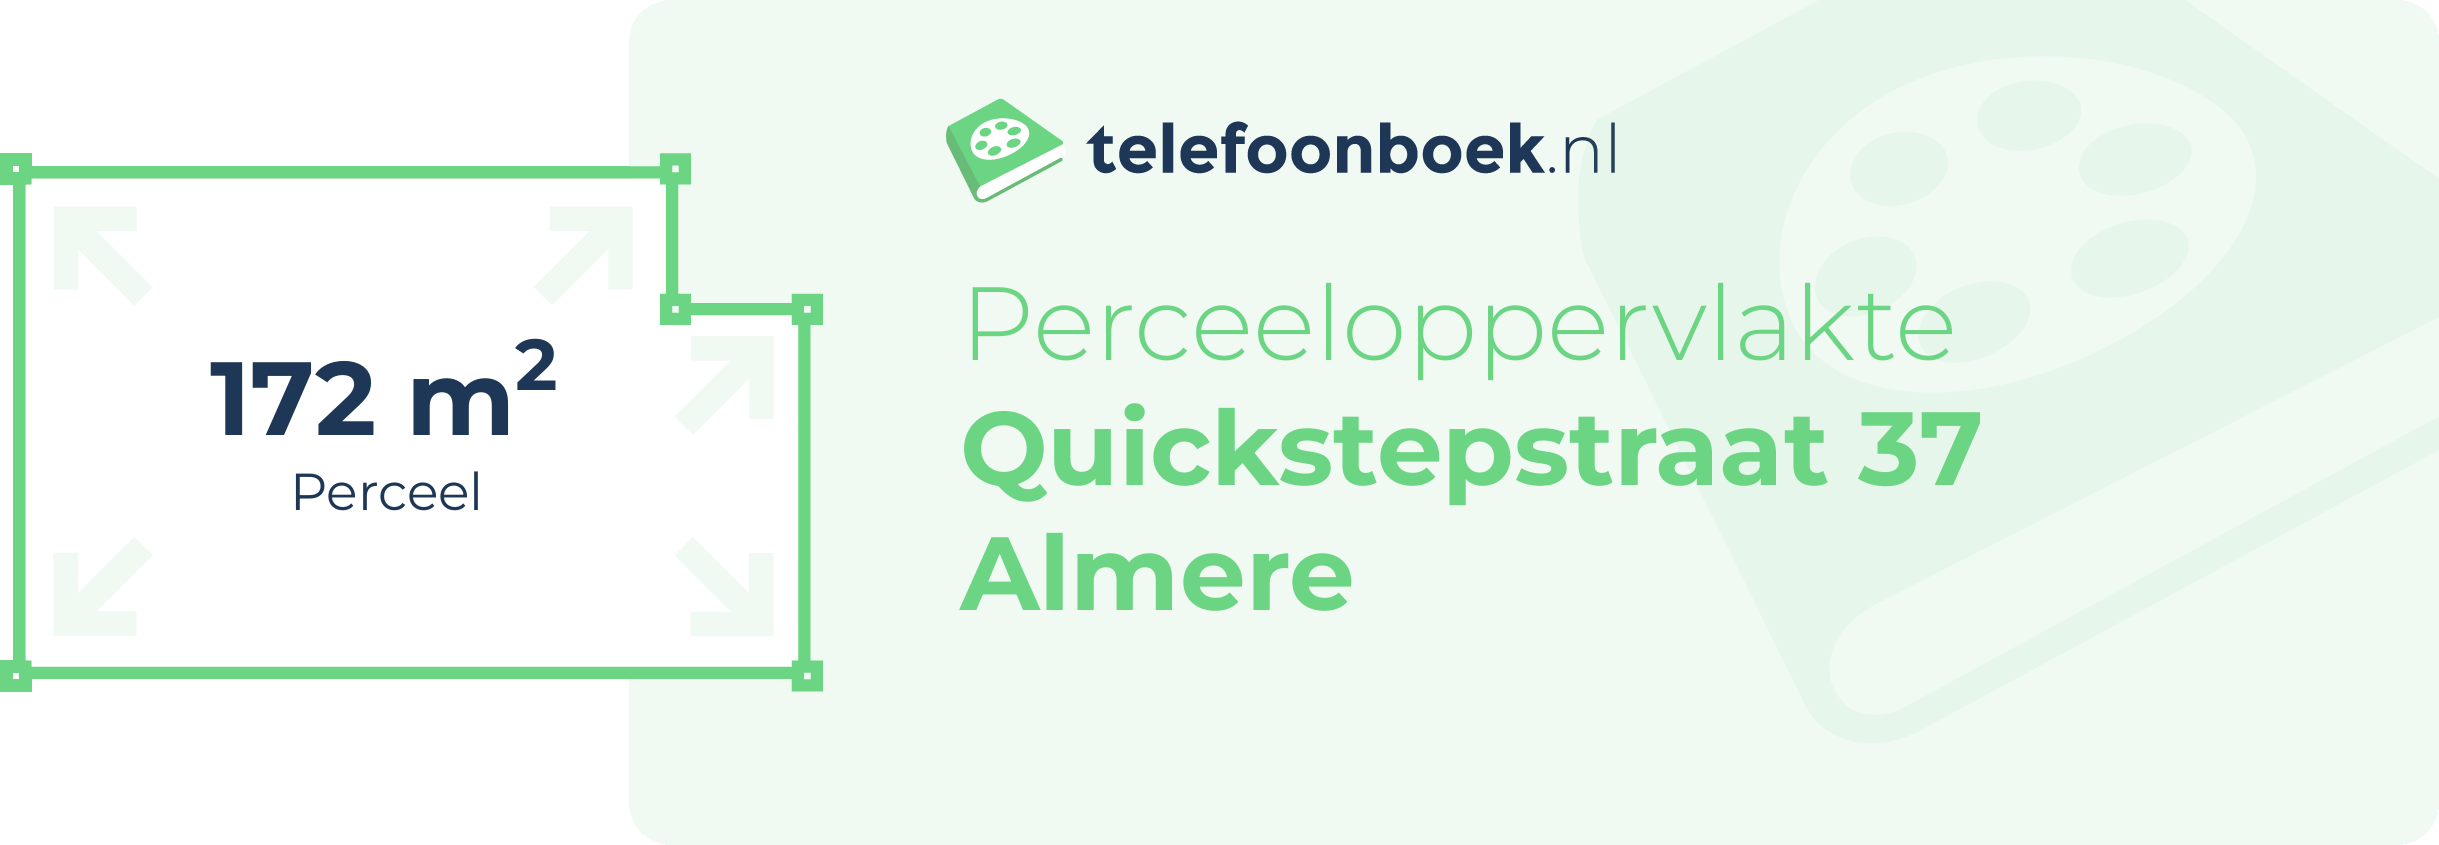 Perceeloppervlakte Quickstepstraat 37 Almere